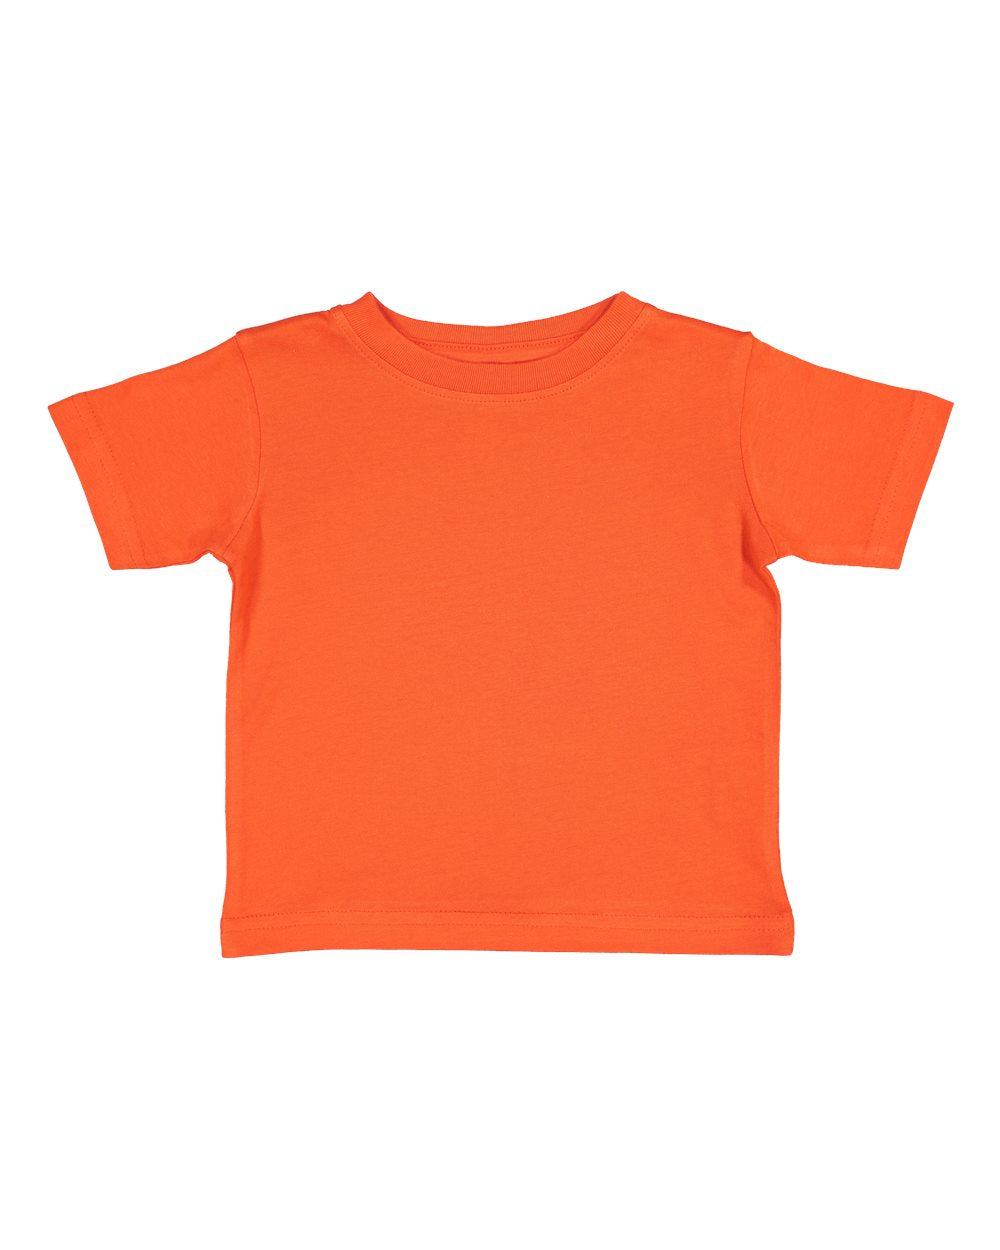 rabbit skins infant jersey tee orange